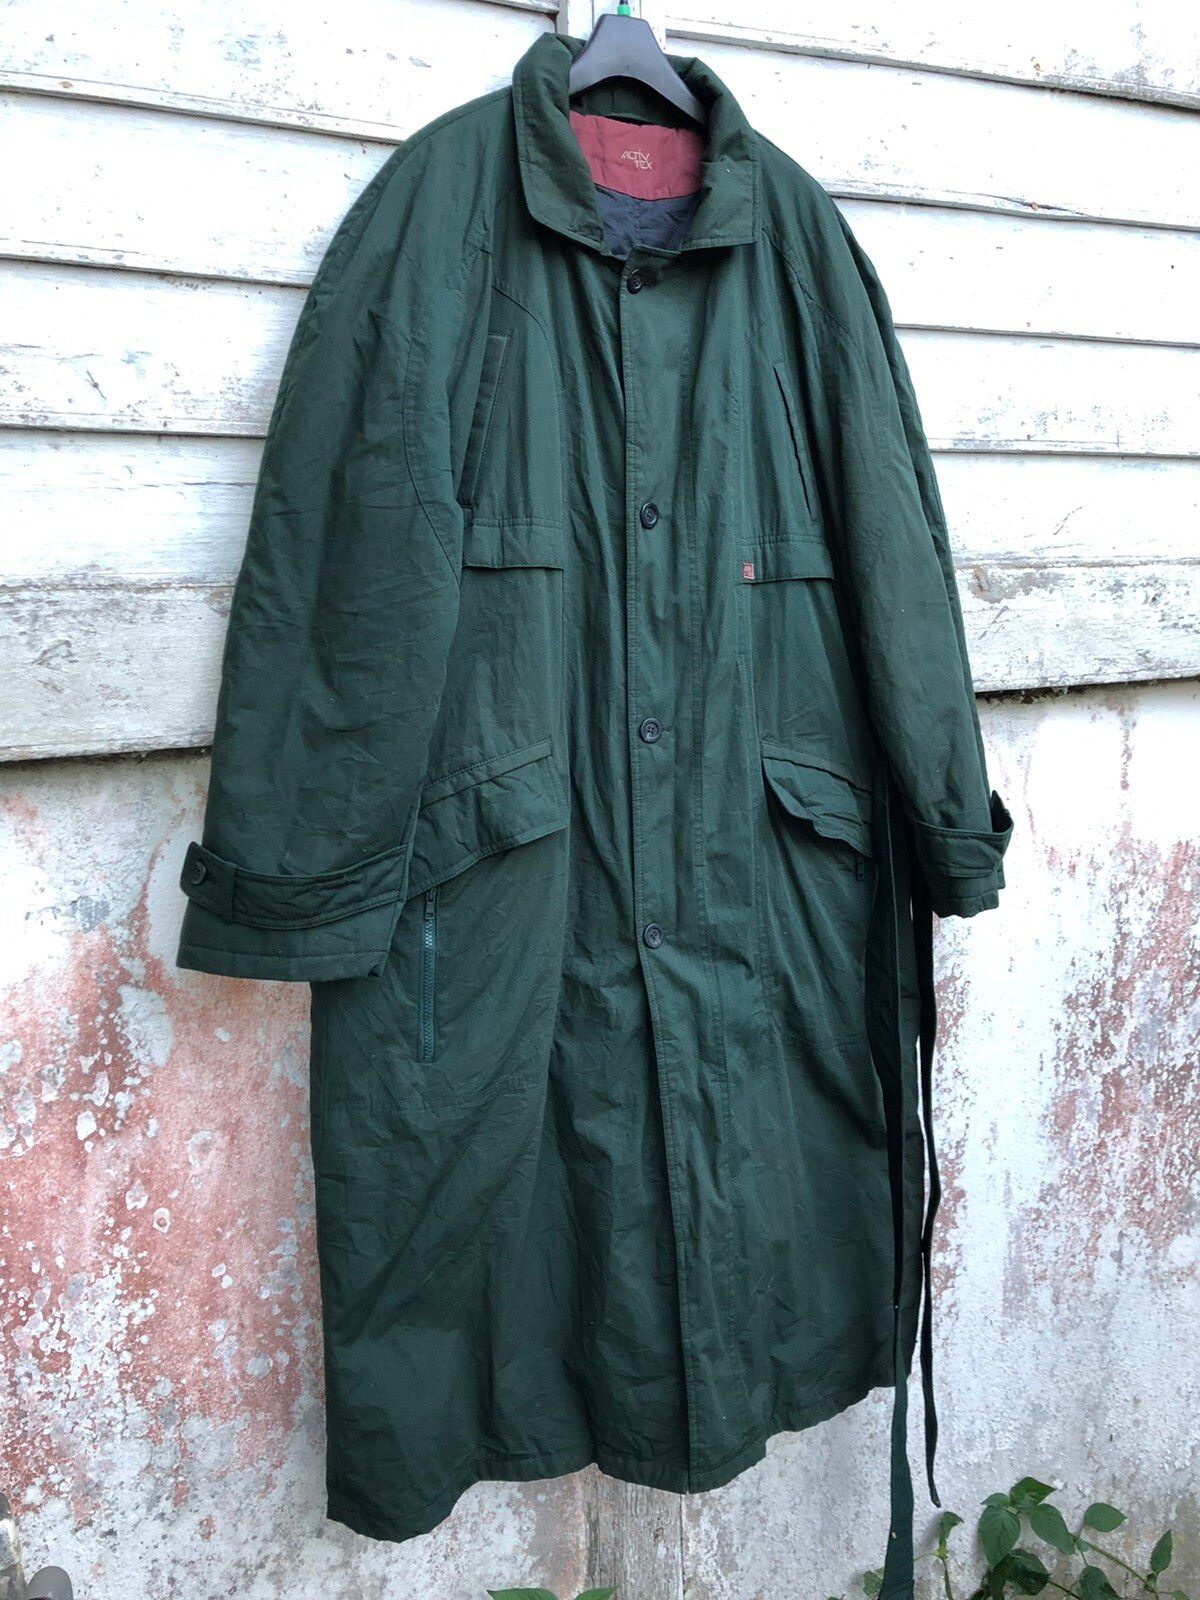 Outdoor Style Go Out! Activ Tex Biiltel West Germany Rainproof Weatherproof Coat Size US L / EU 52-54 / 3 - 2 Preview